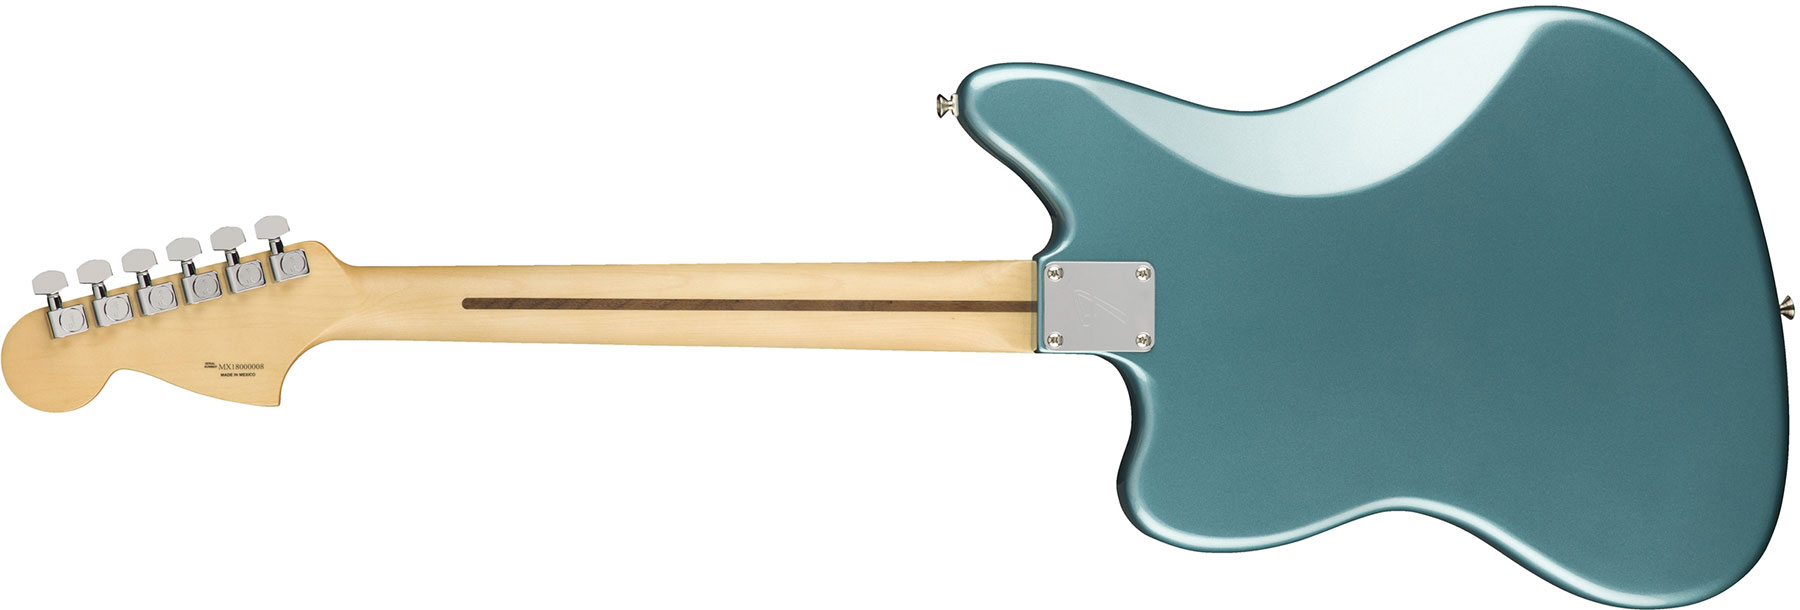 Fender Jaguar Player Mex Hs Trem Pf - Tidepool - Guitarra electrica retro rock - Variation 1